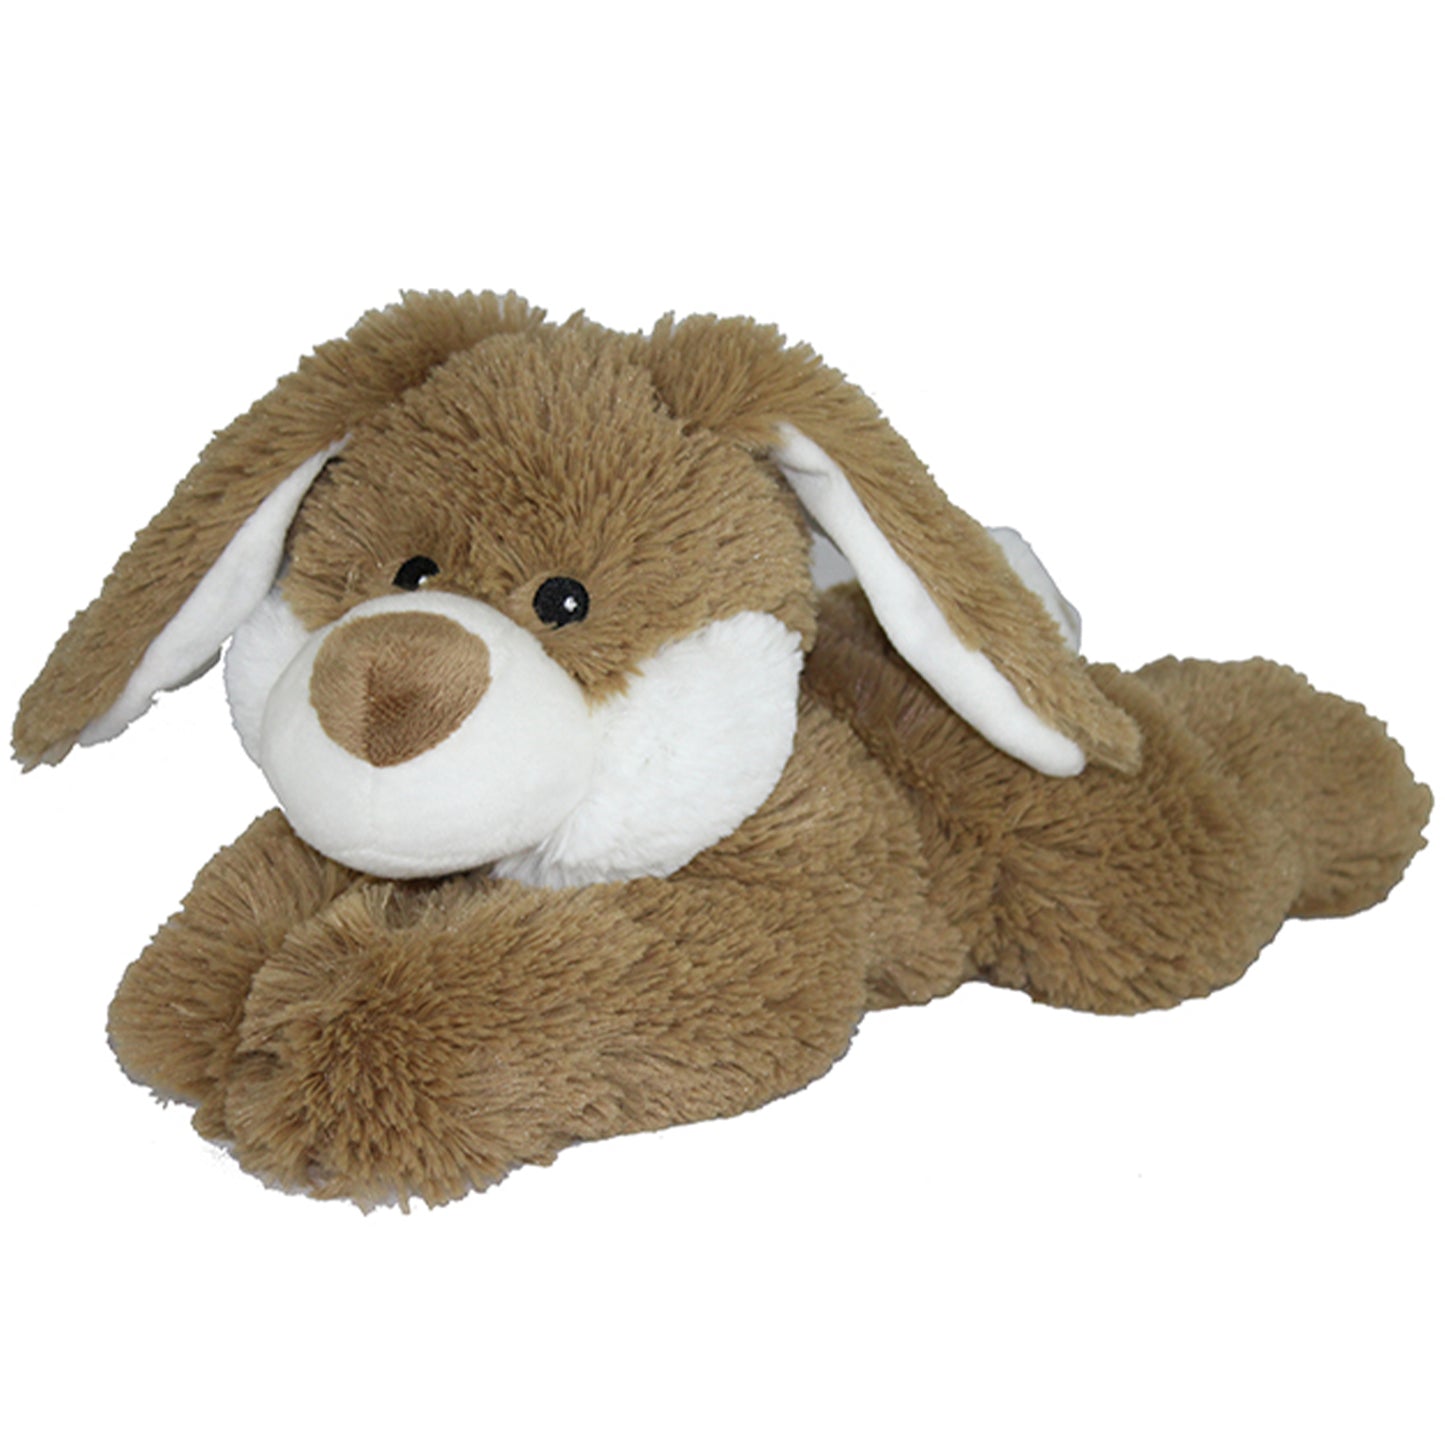 Warmies Plush Animal - Brown Bunny